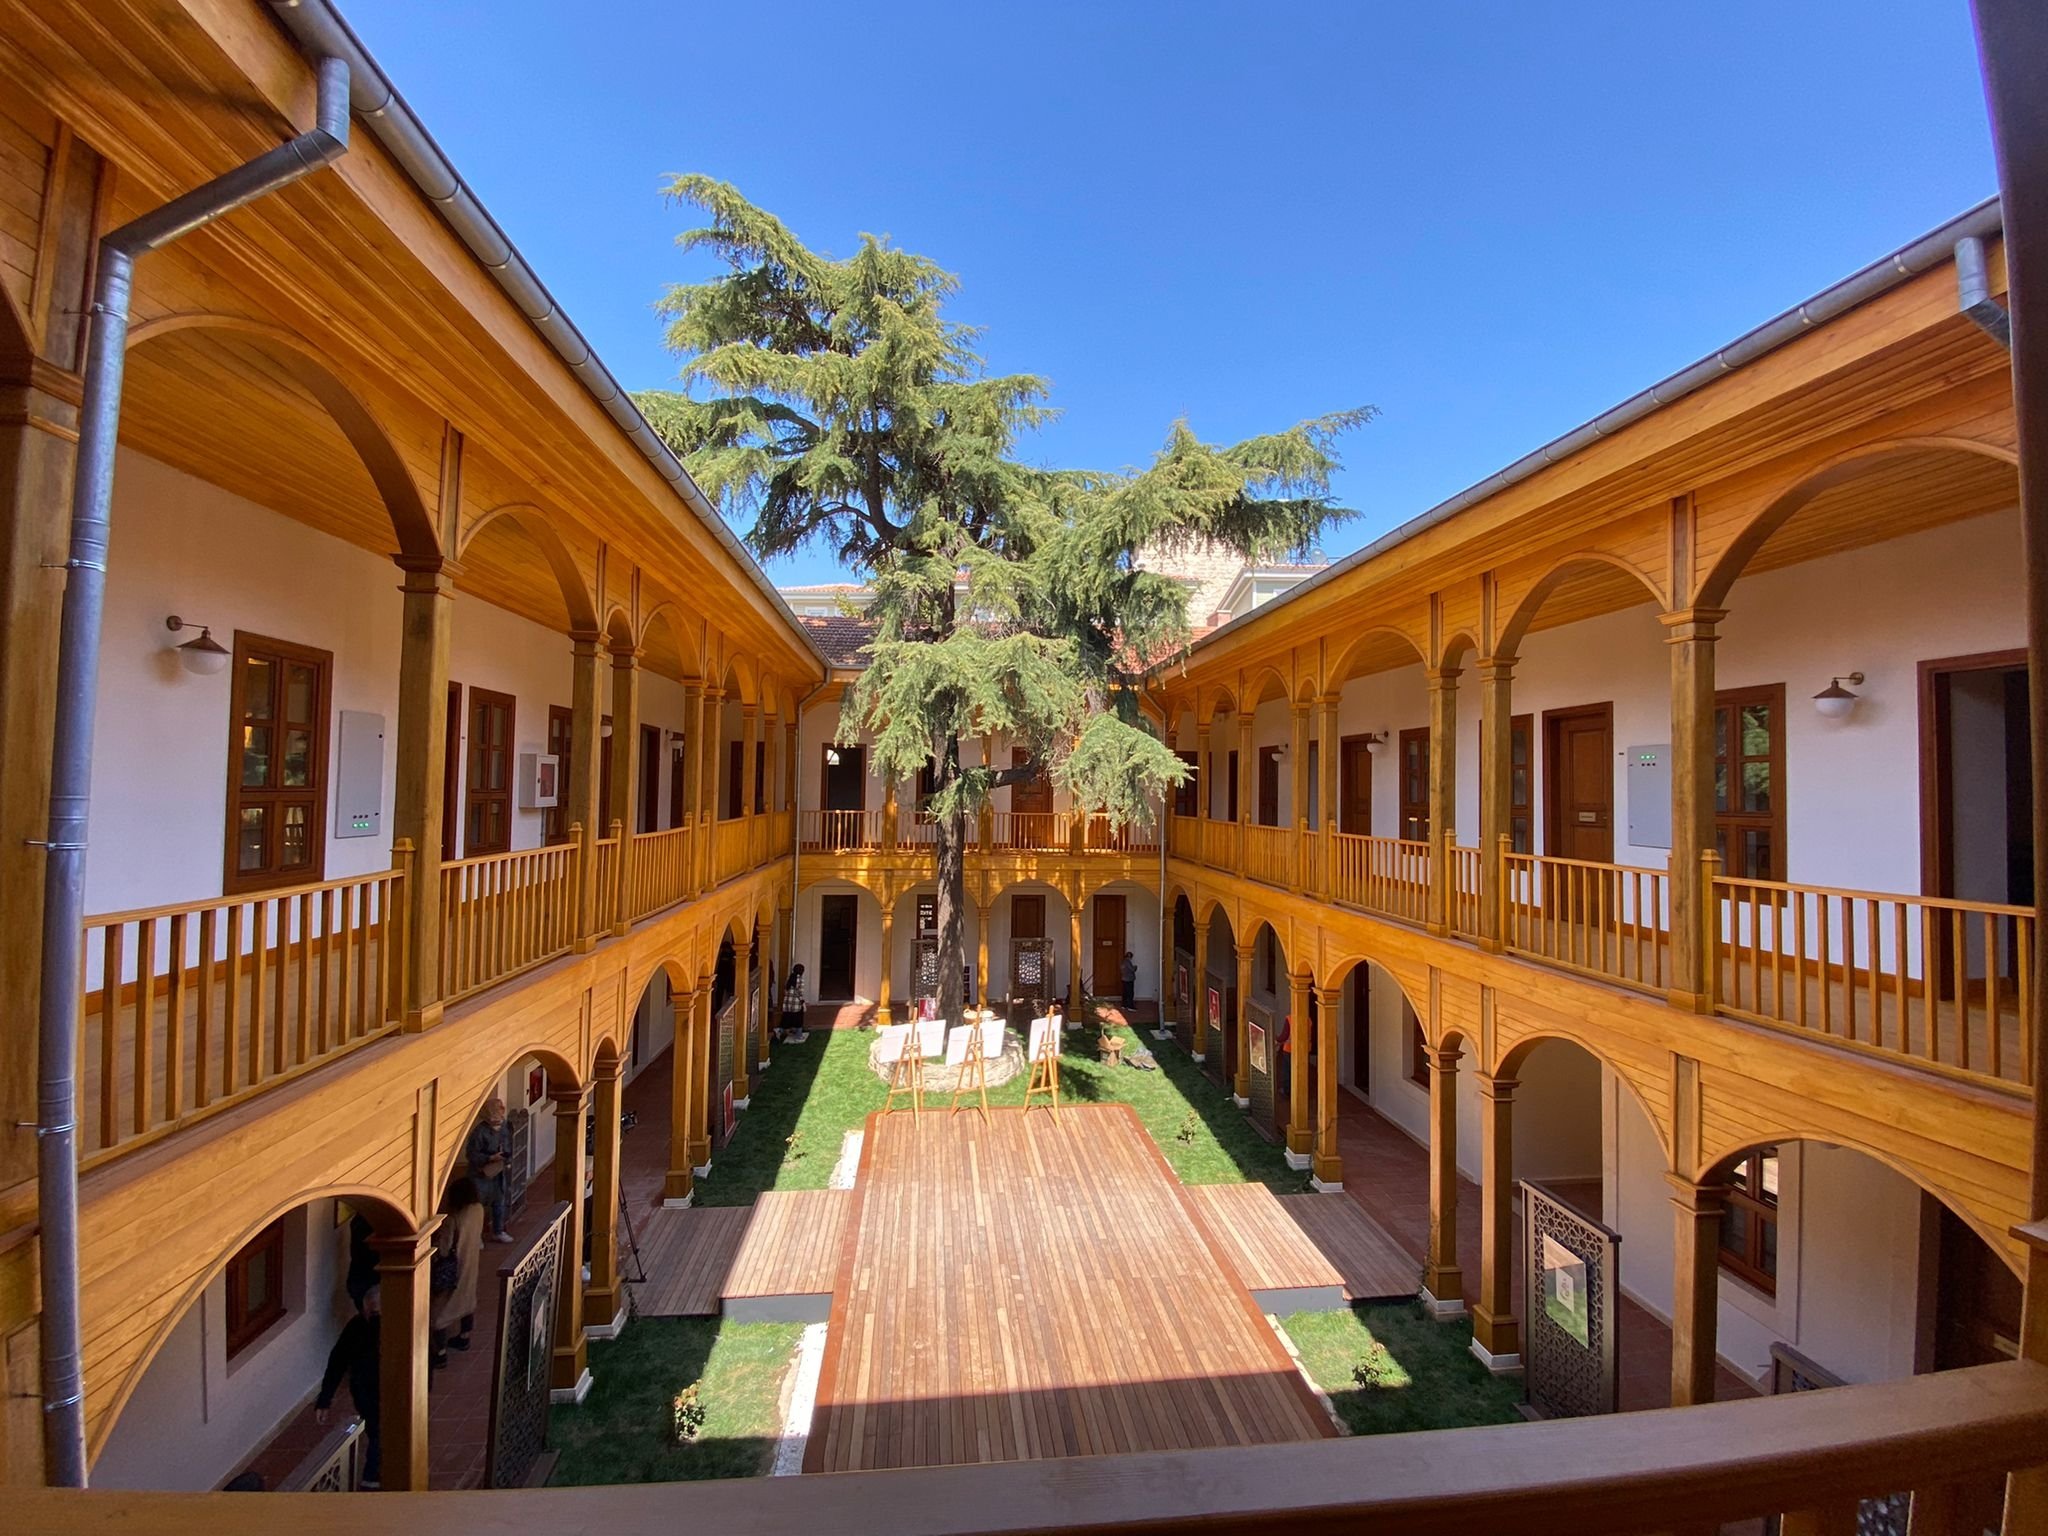 After Hagia Sophia reversion, Turkey reopens its iconic madrassa